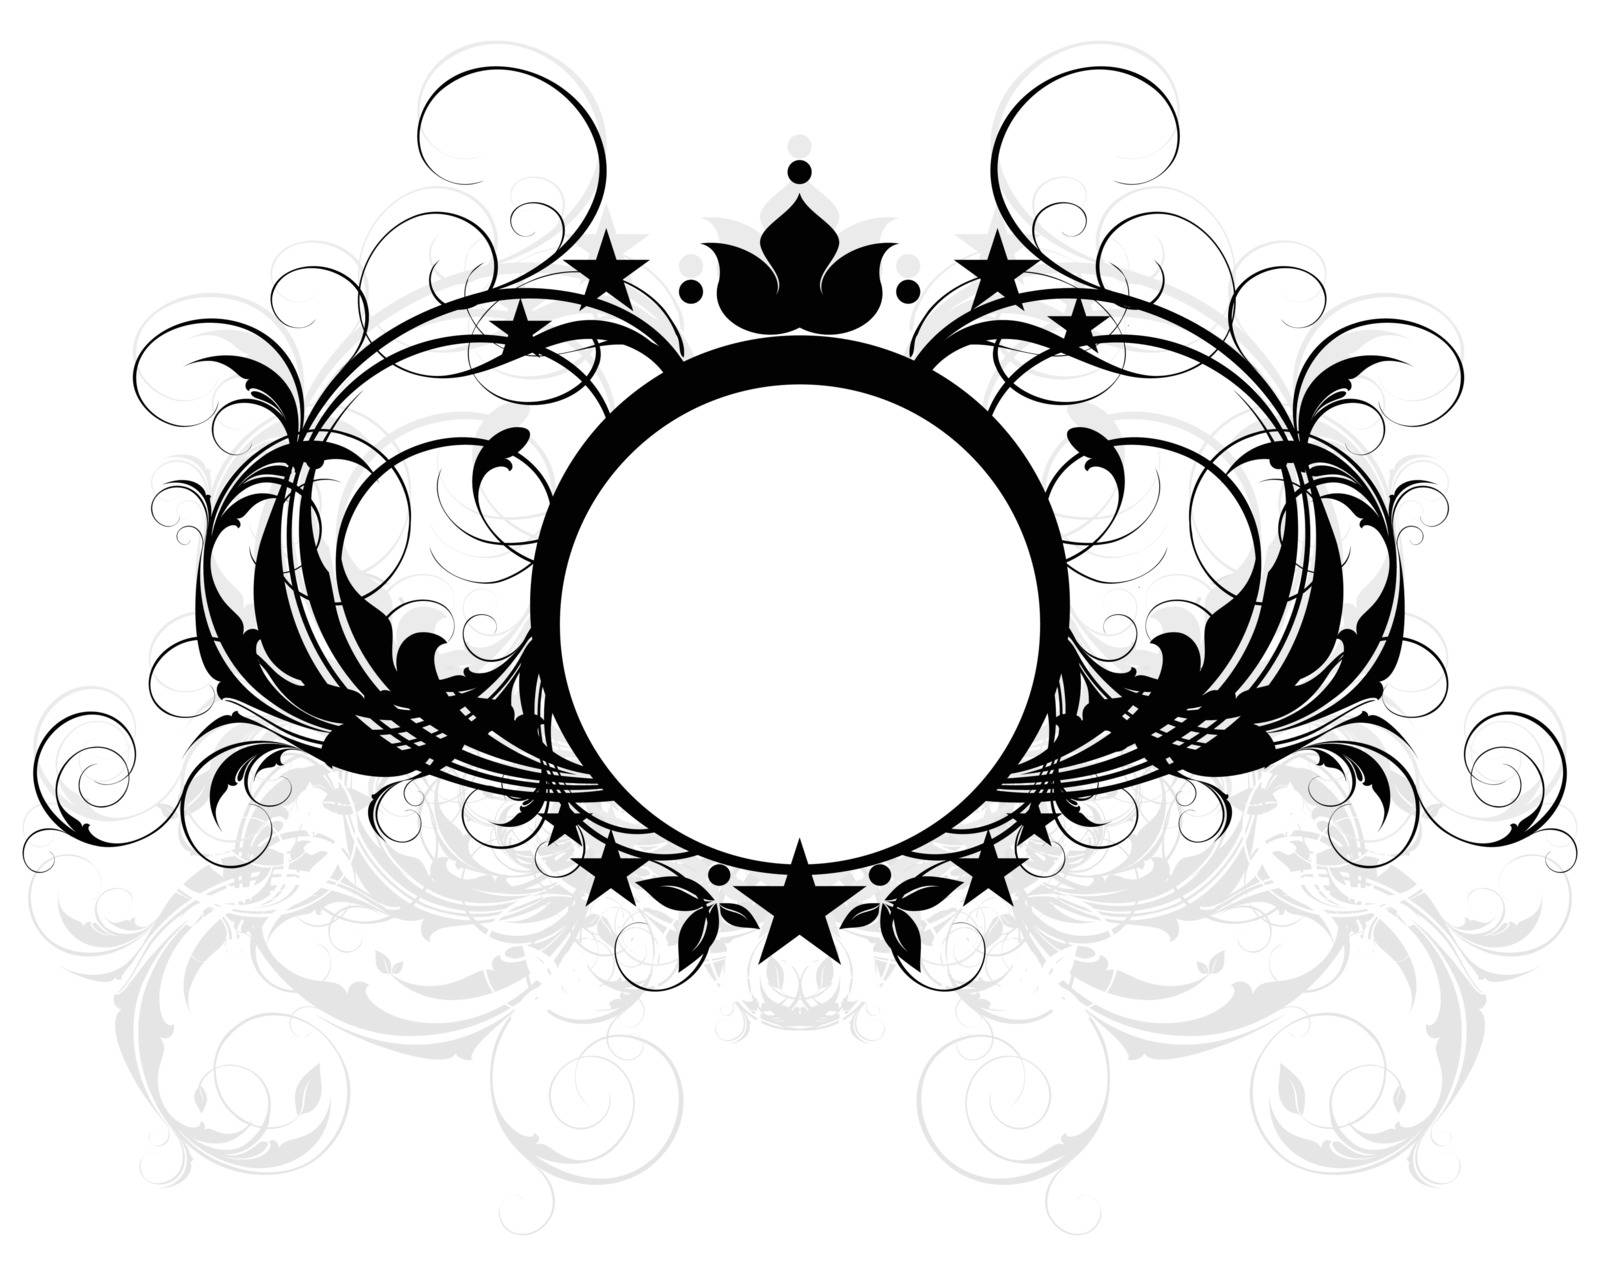 ornamental shield by kjolak